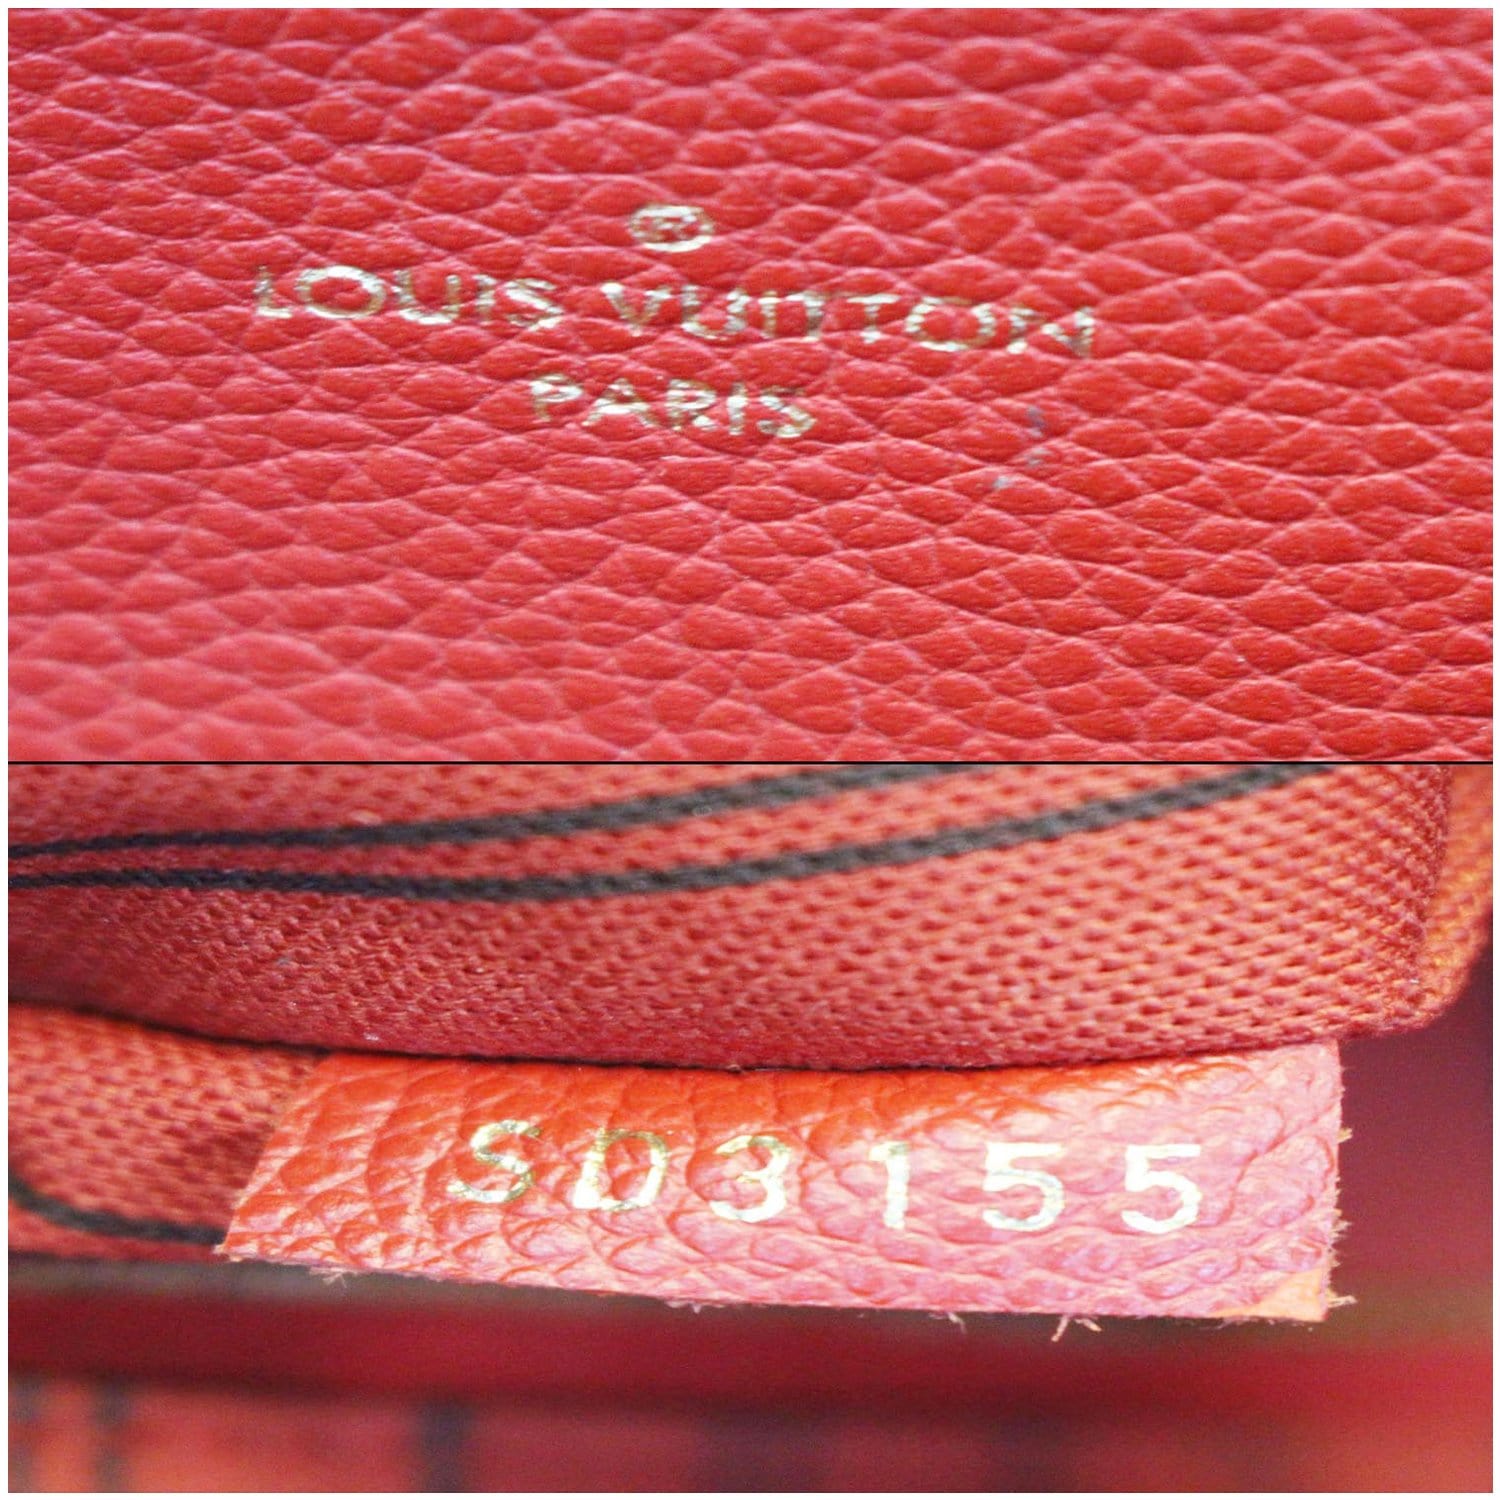 LOUIS VUITTON Bagatelle Monogram Empreinte Leather Shoulder Bag Orange-US